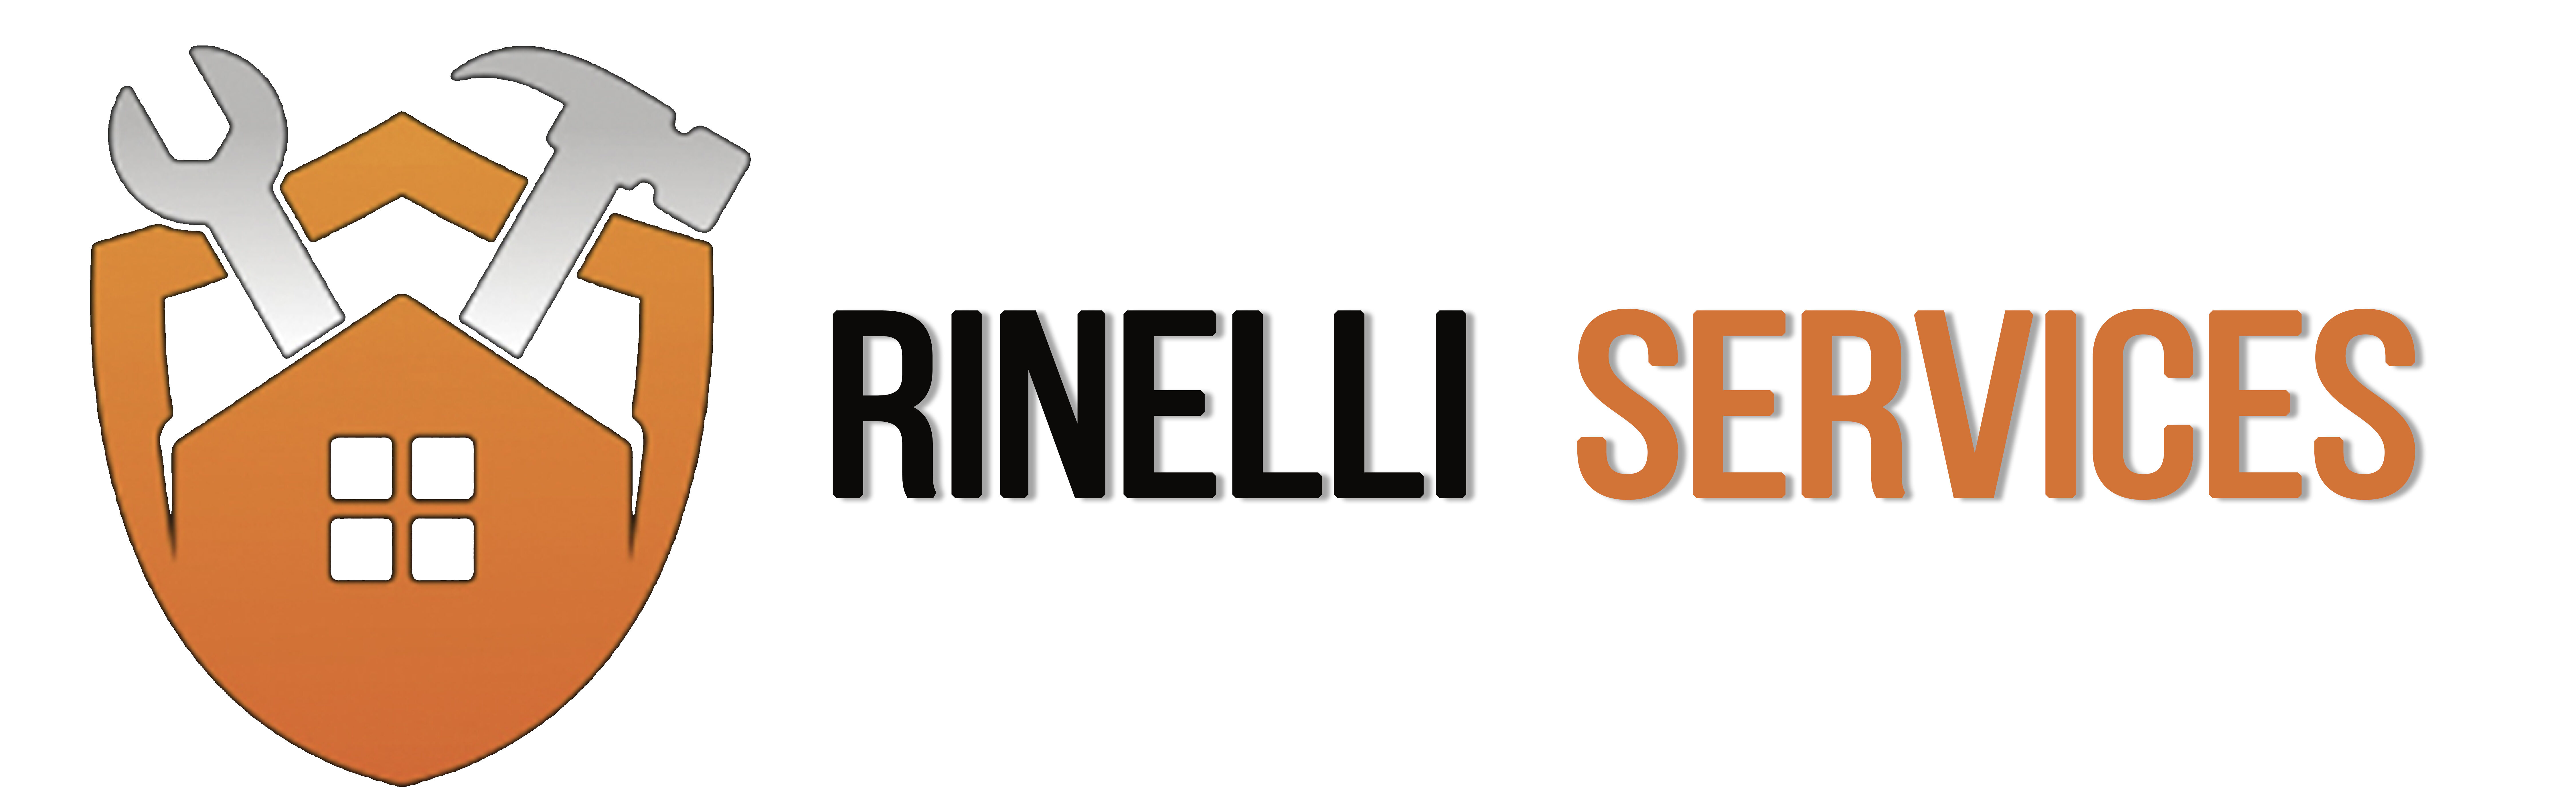 Rinelli Services company logo